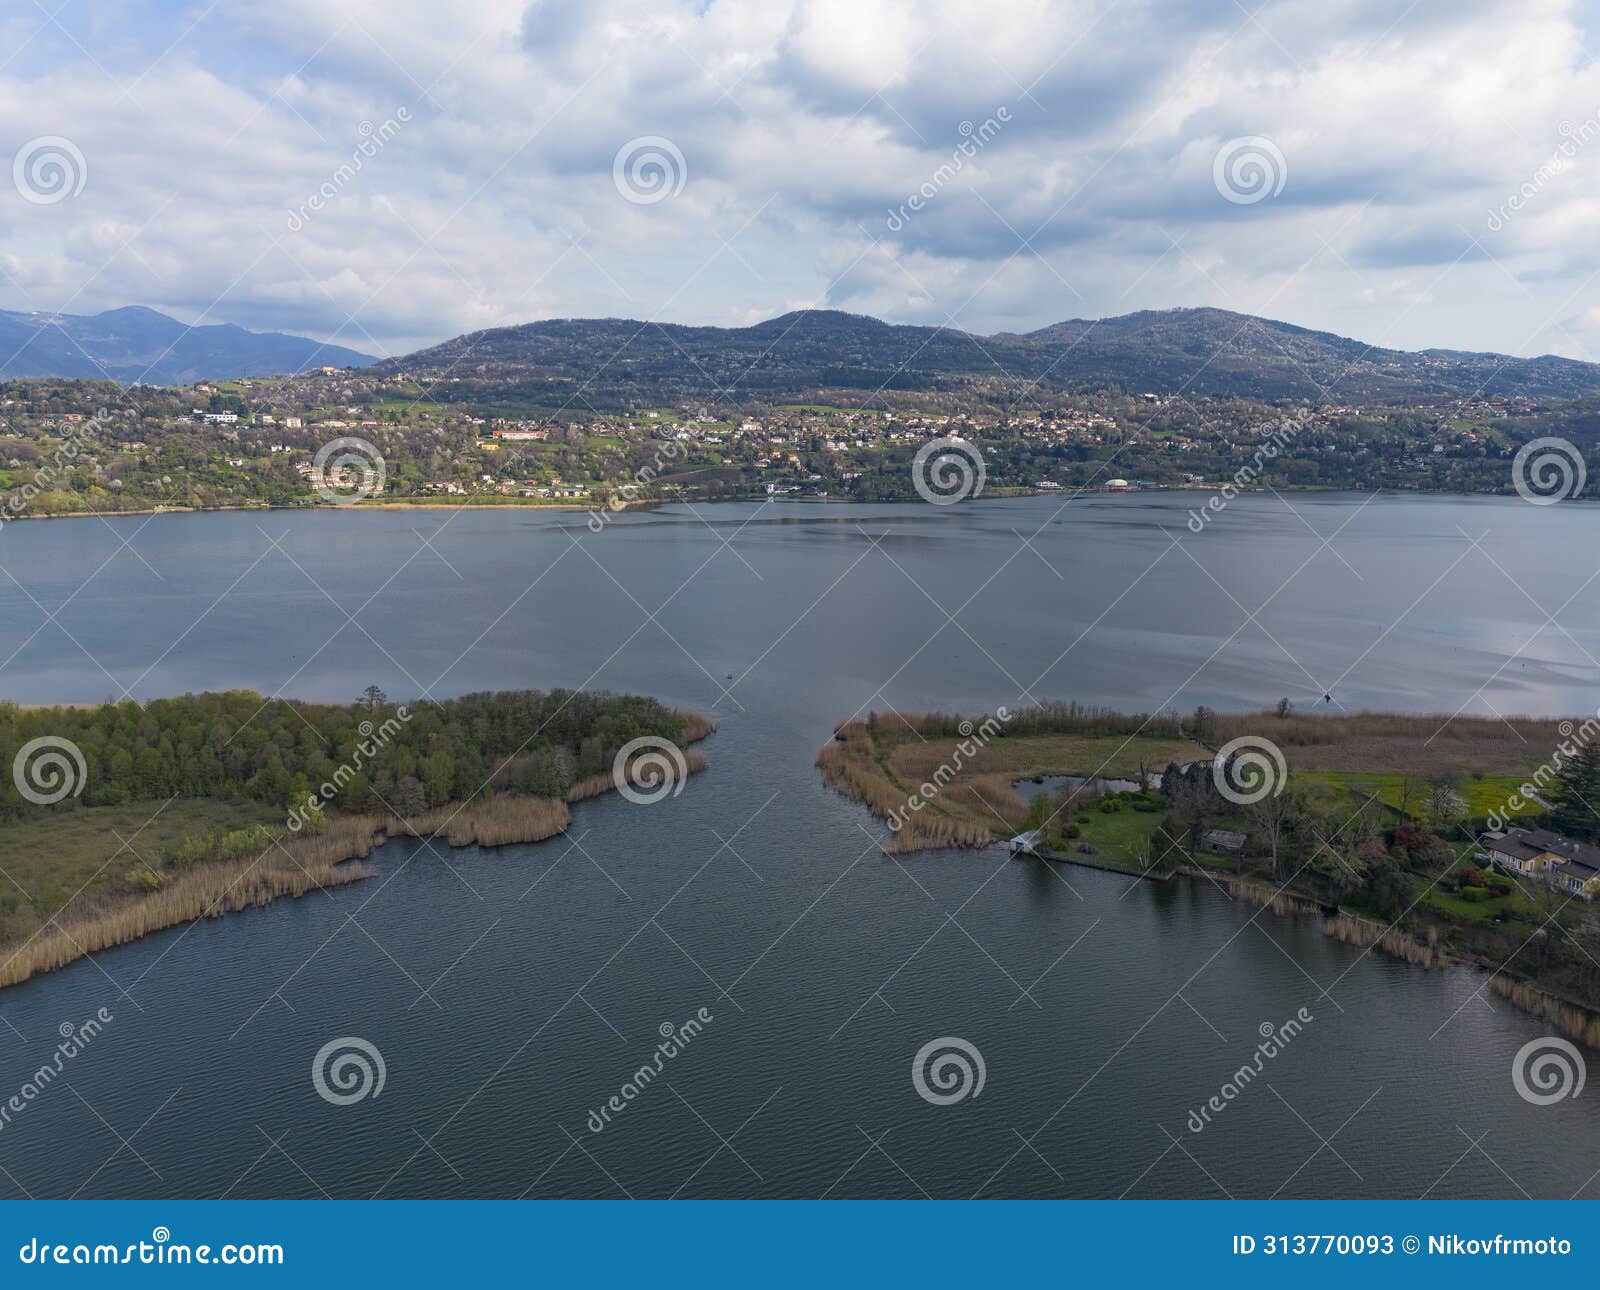 view of isella peninsula on lake annone